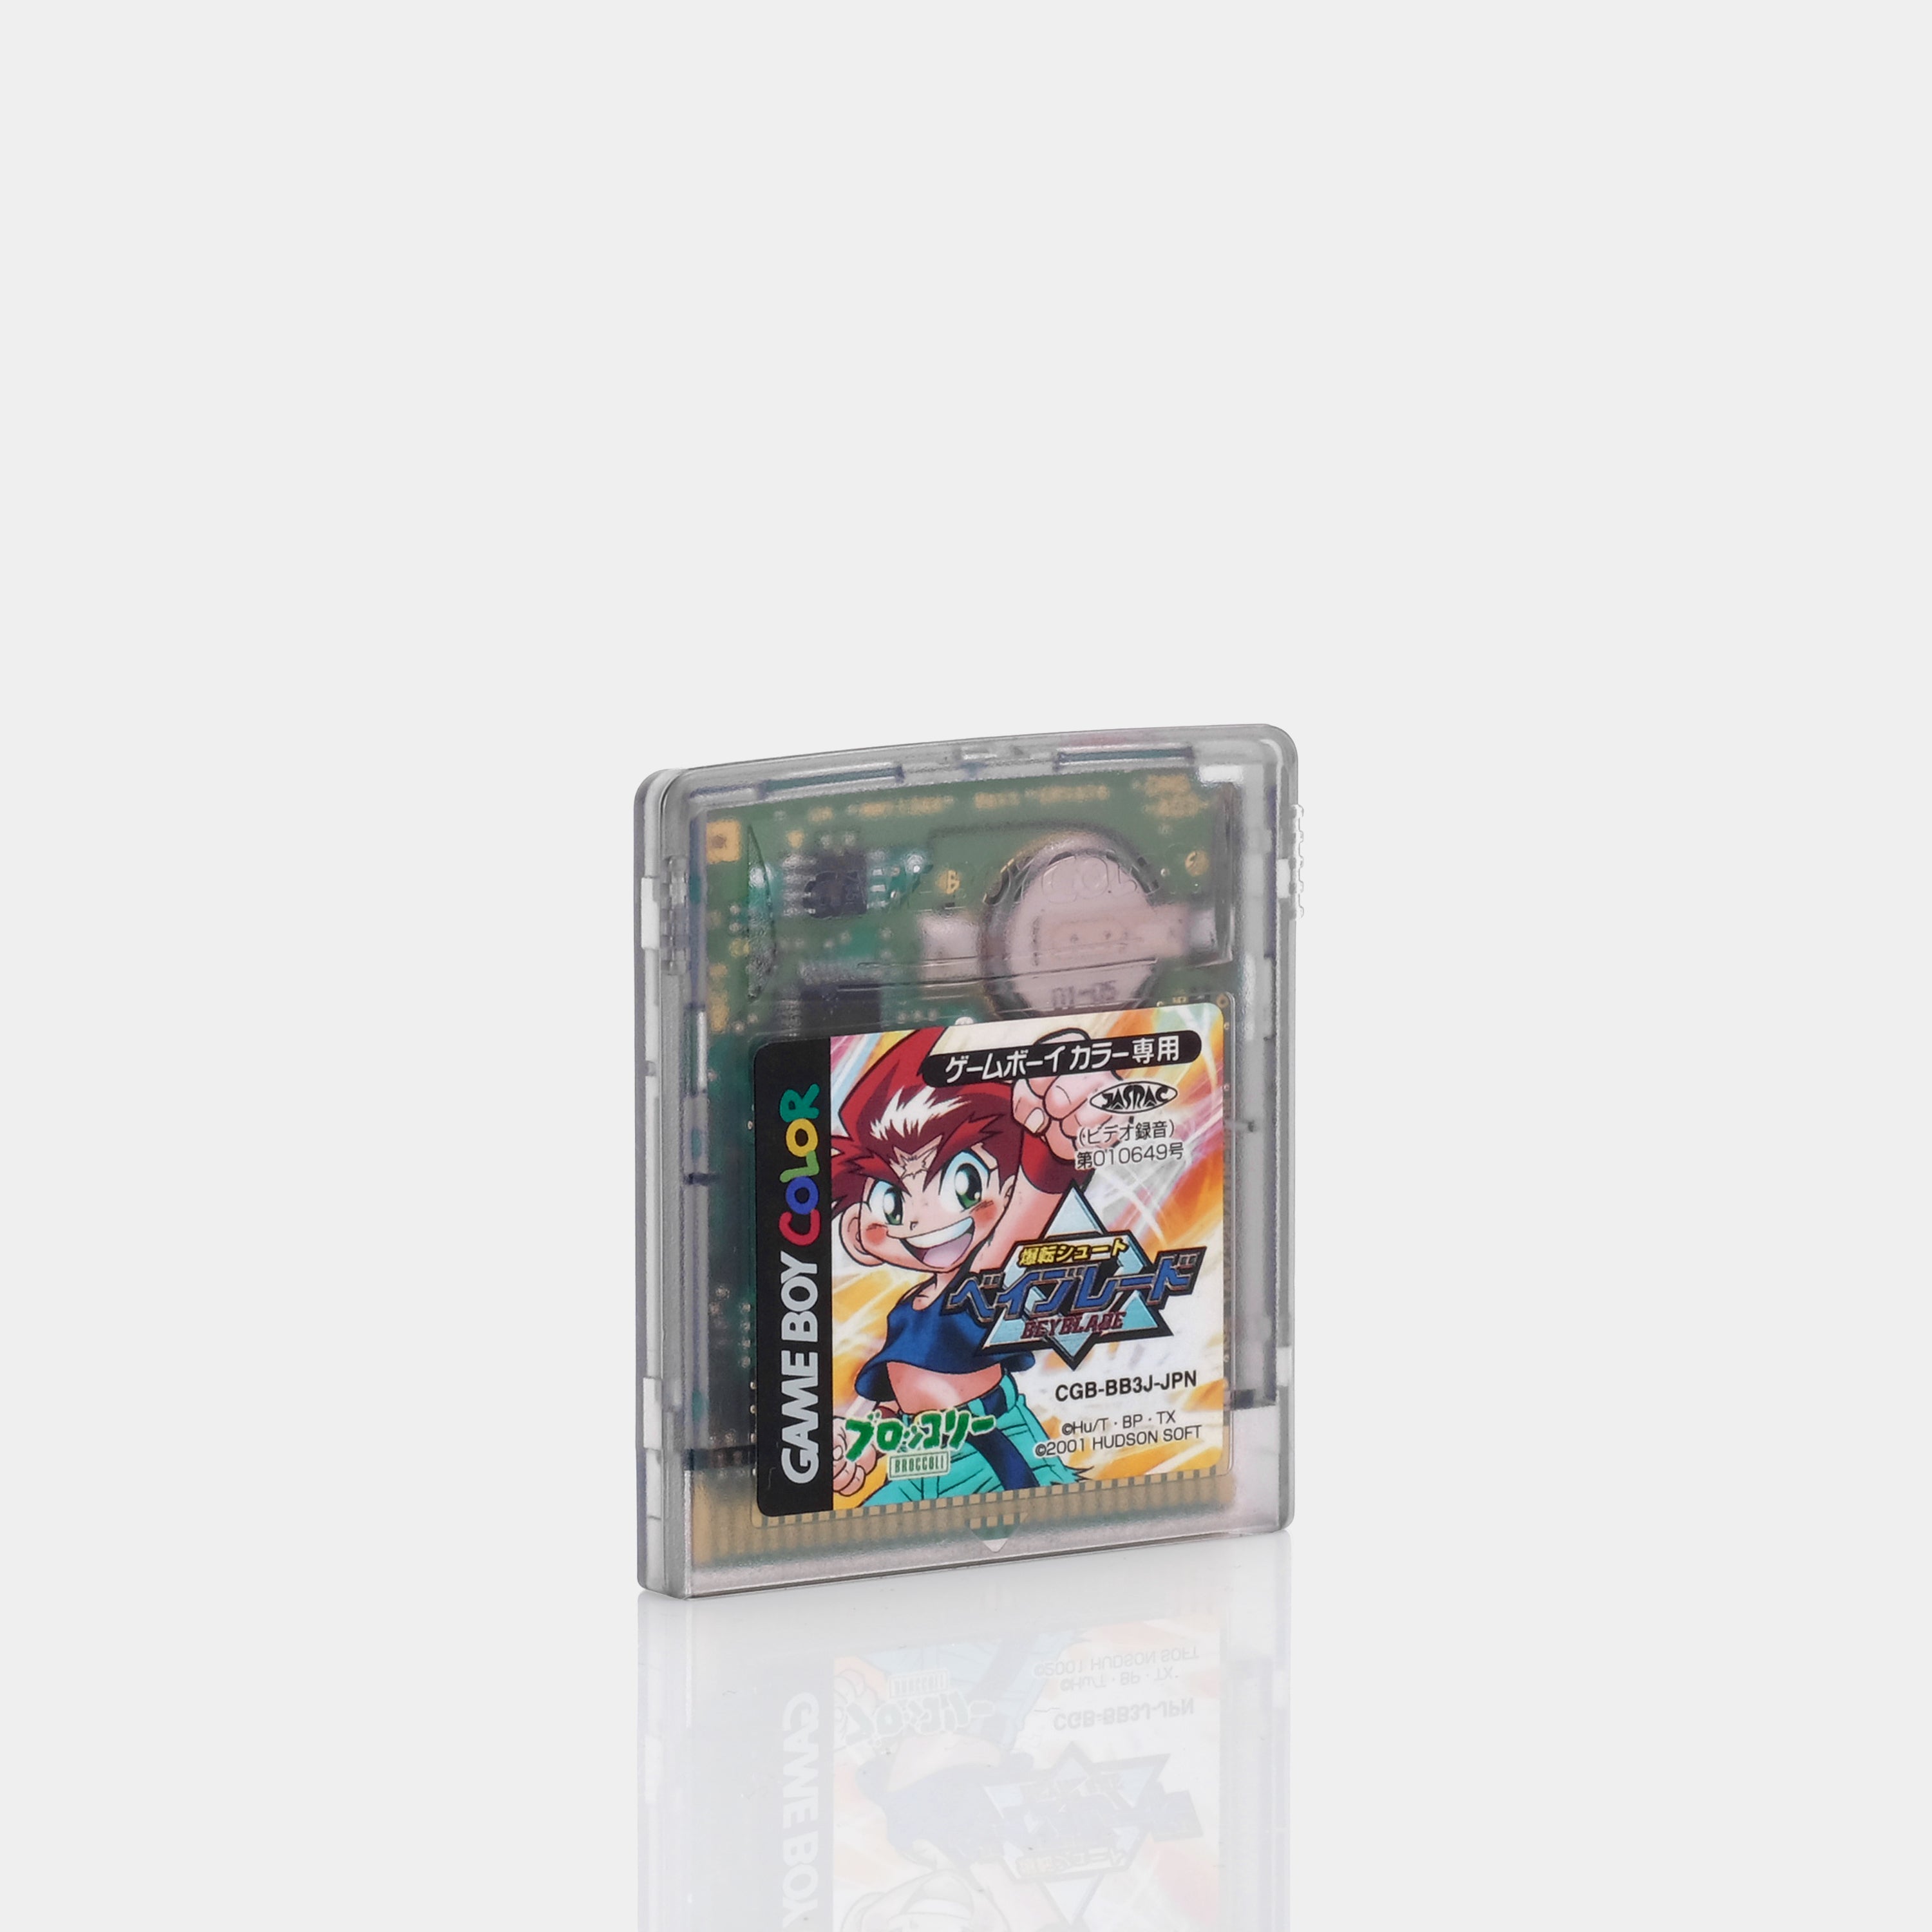 Bakuten Shoot Beyblade 爆転シュート ベイブレード (Japanese Version) Game Boy Color Game